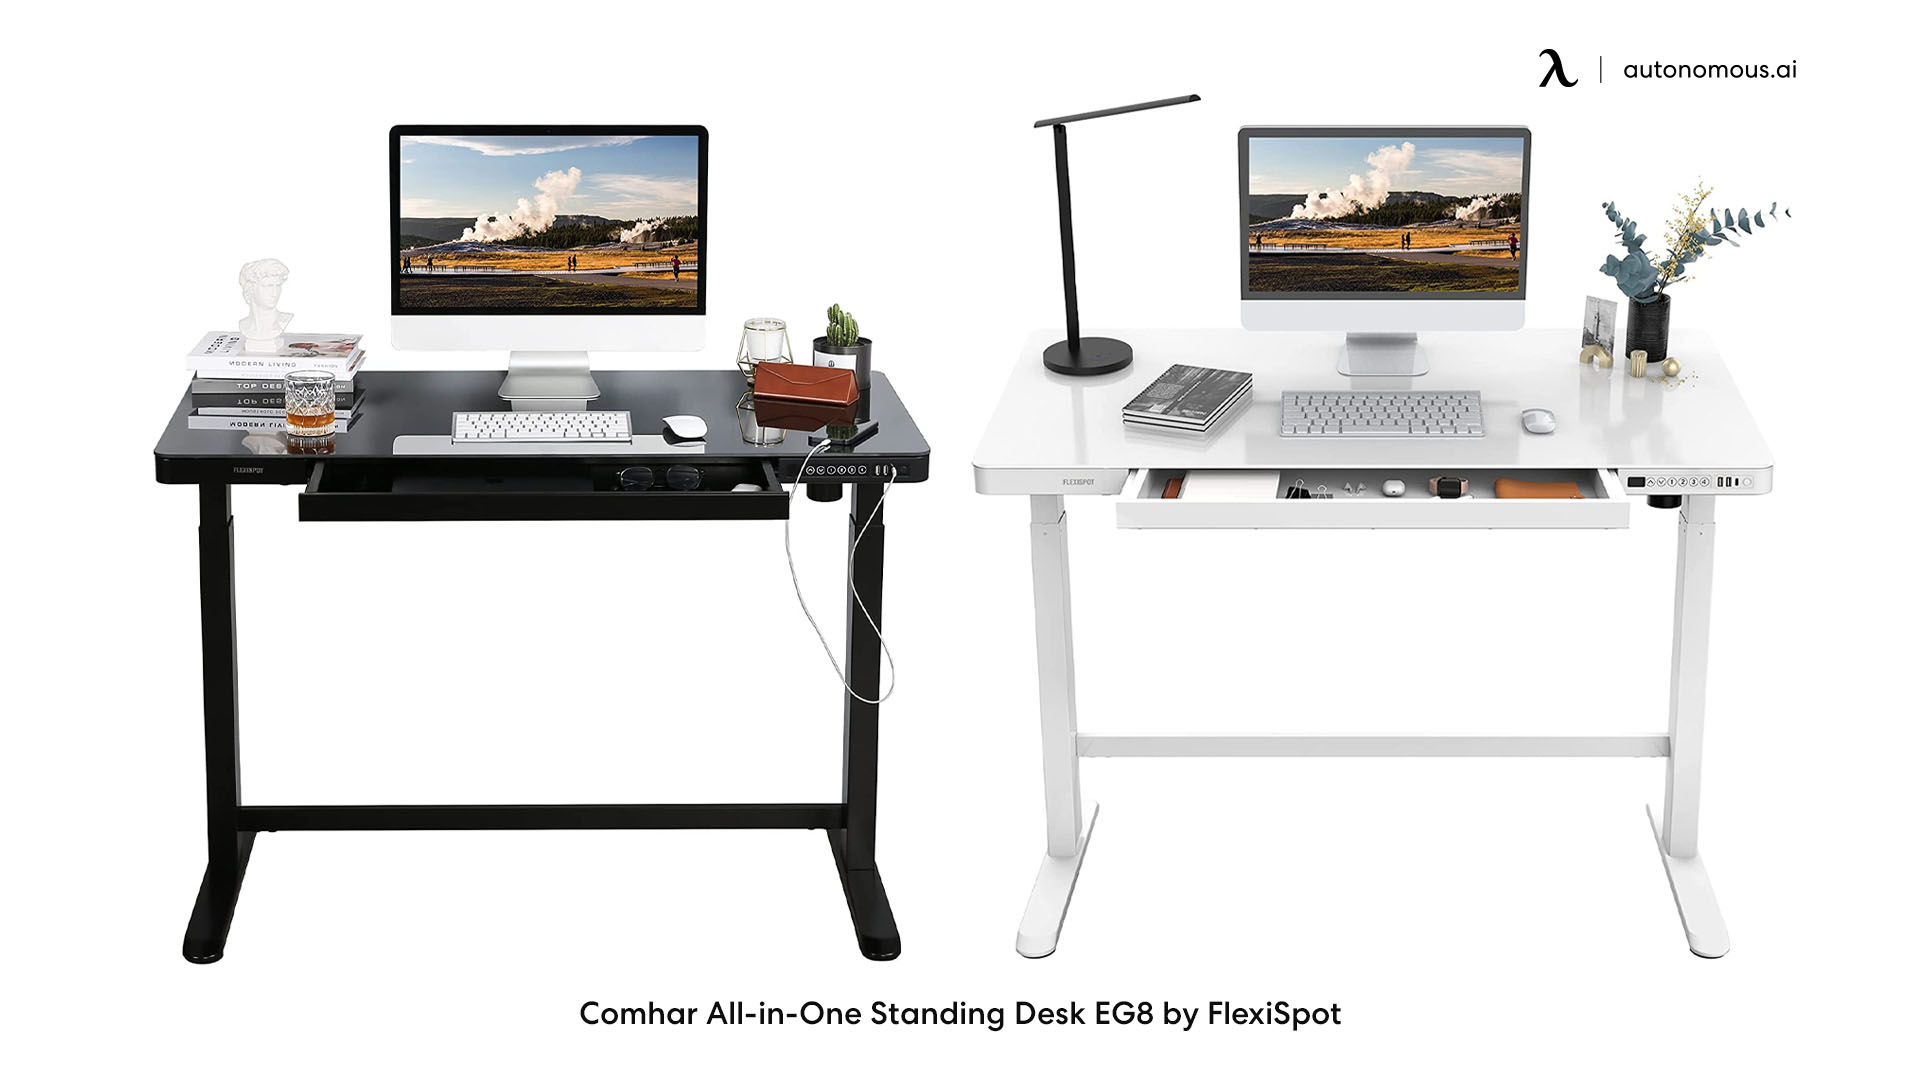 Comhar All-in-One Standing Desk EG8 by FlexiSpot